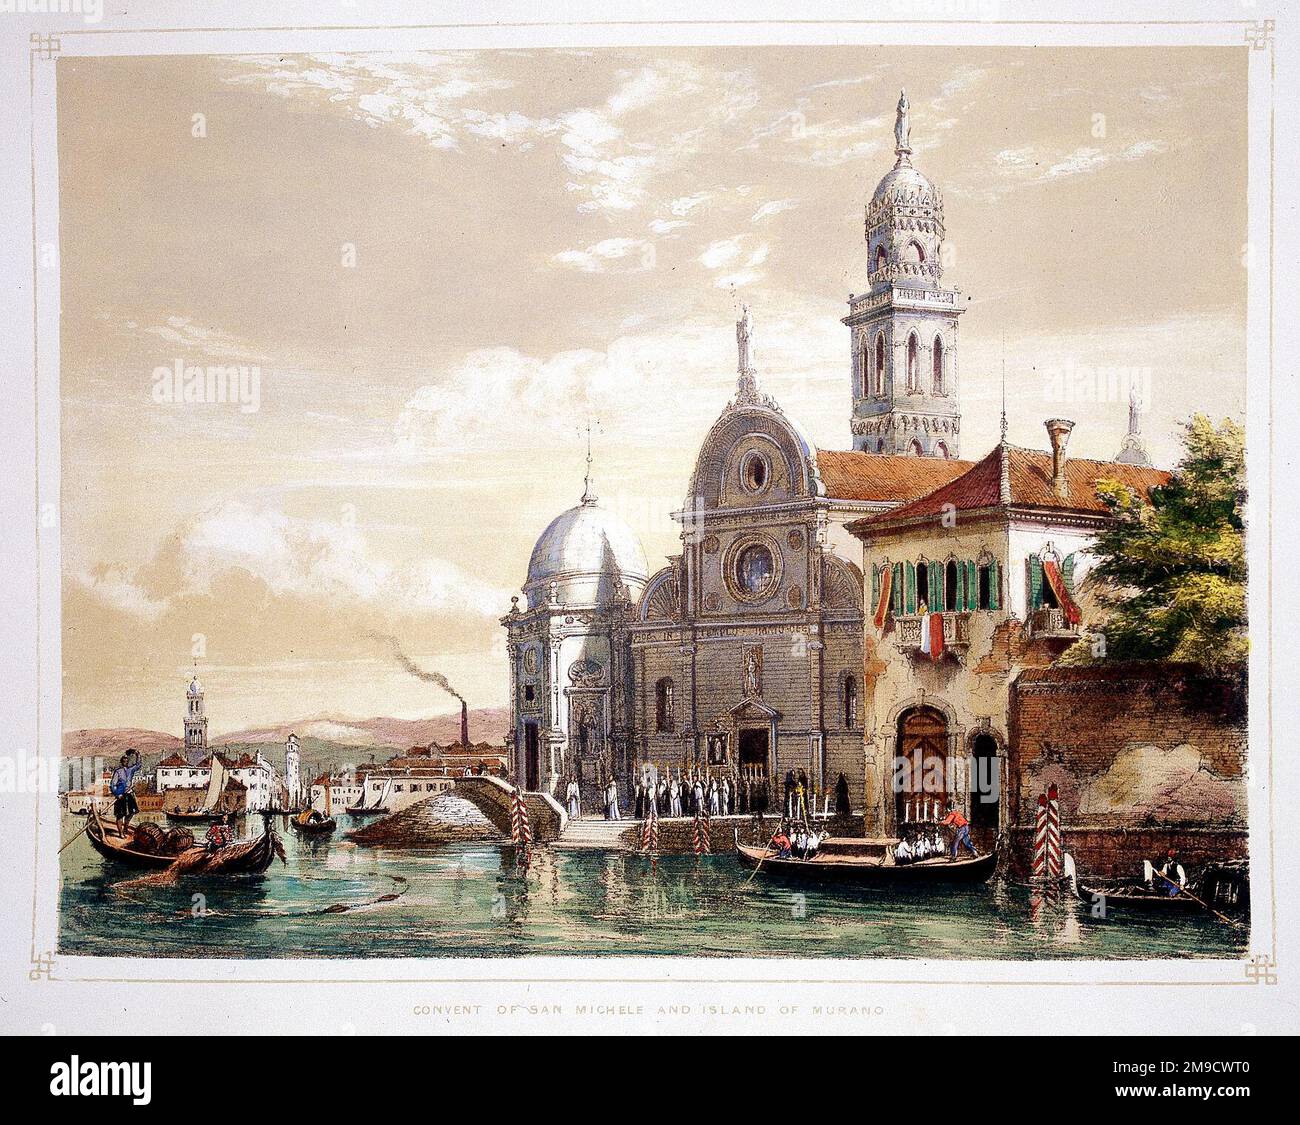 Venedig - Kloster San Michele Und Insel Murano Stockfoto